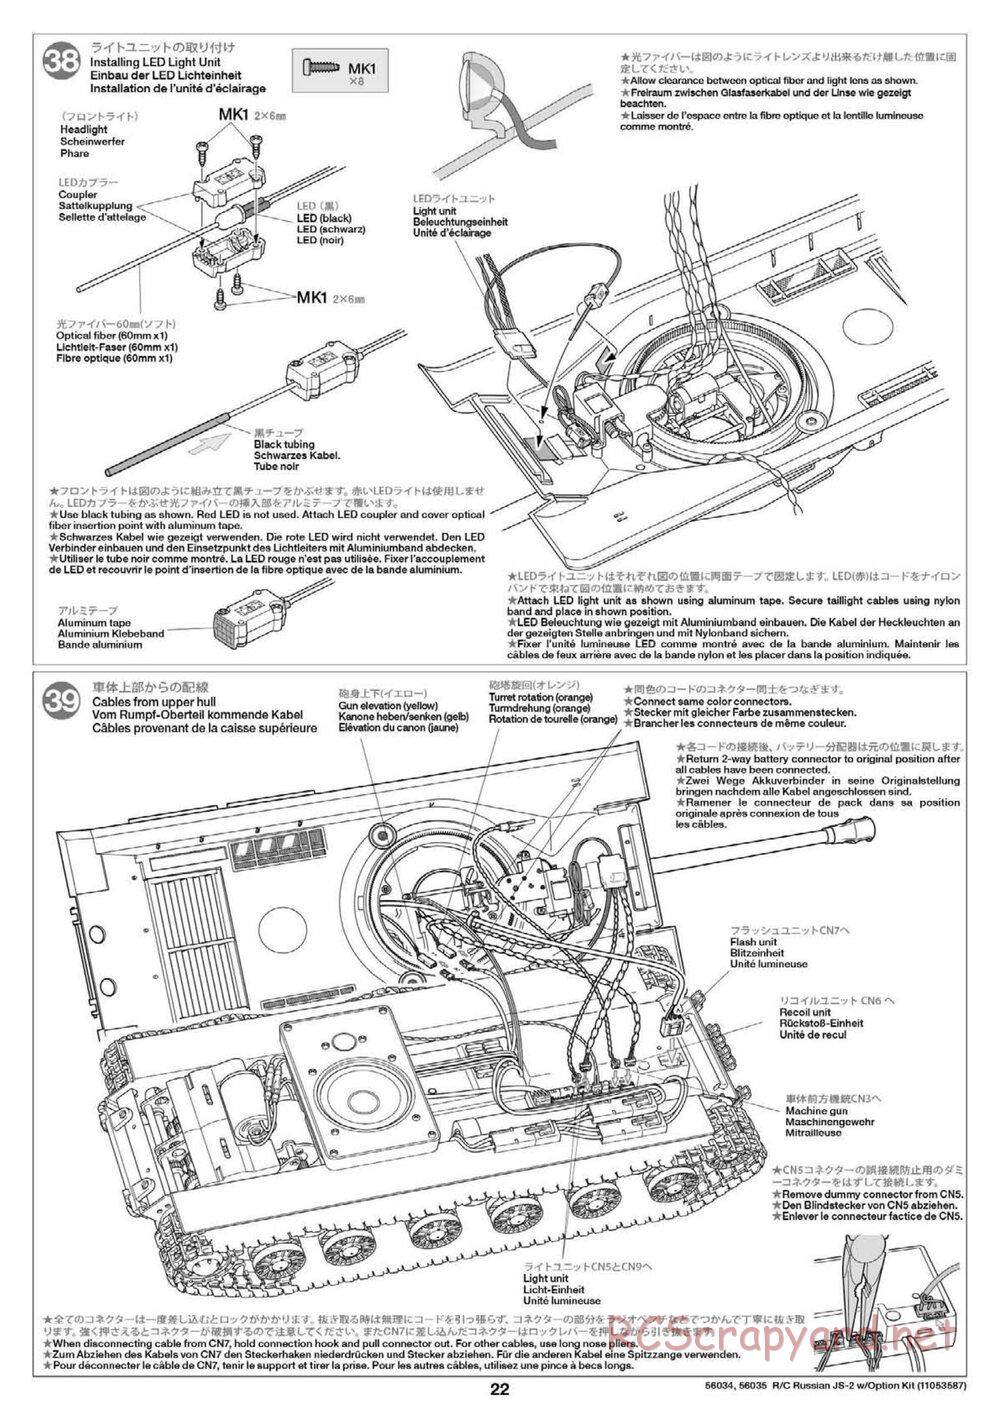 Tamiya - Russian Heavy Tank JS-2 1944 ChKZ - 1/16 Scale Chassis - Manual - Page 22